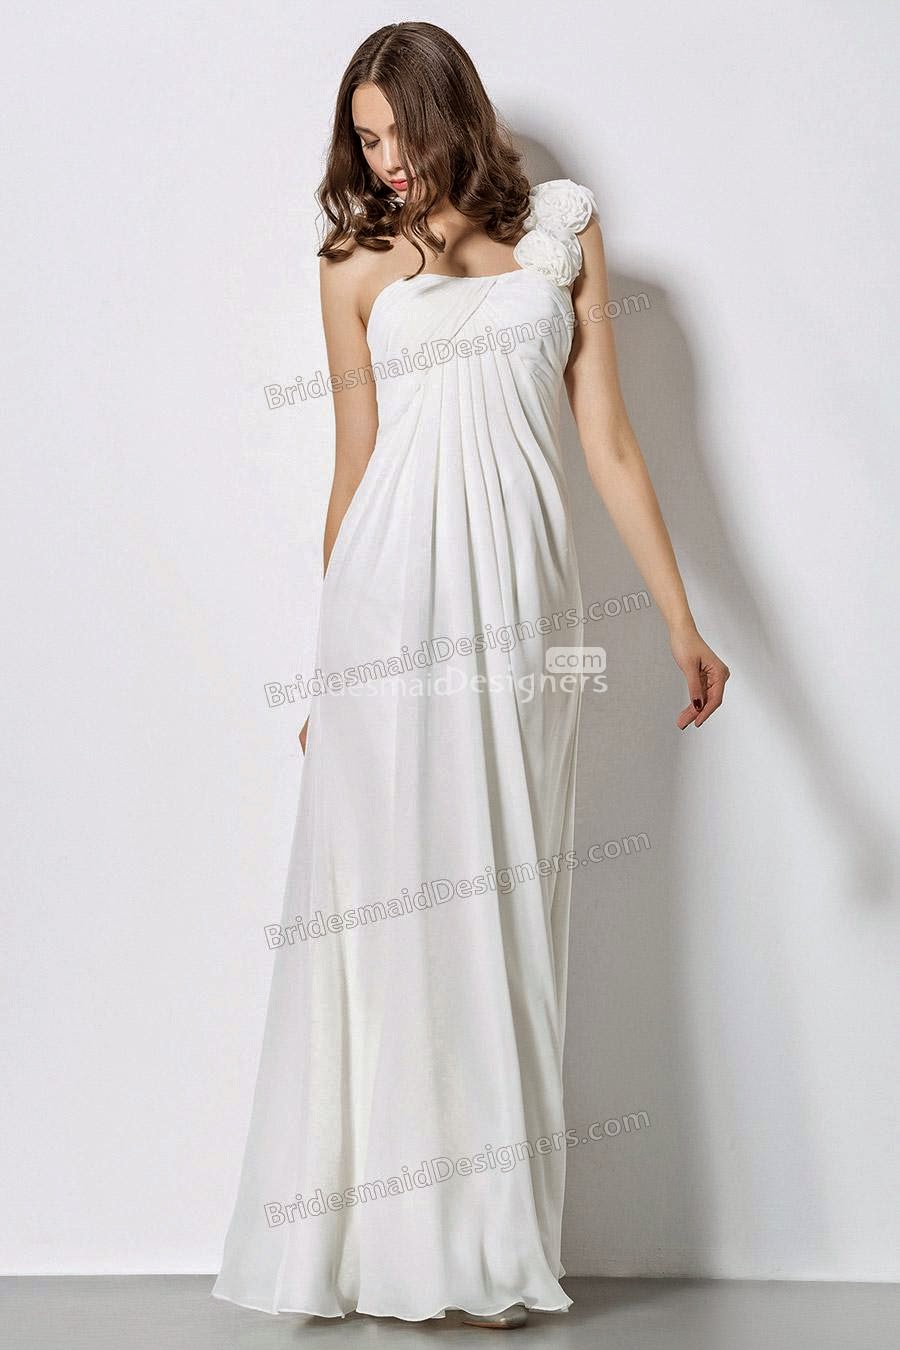 http://www.bridesmaiddesigners.com/white-one-shoulder-empire-flower-adorned-long-chiffon-bridesmaid-dress-1115.html